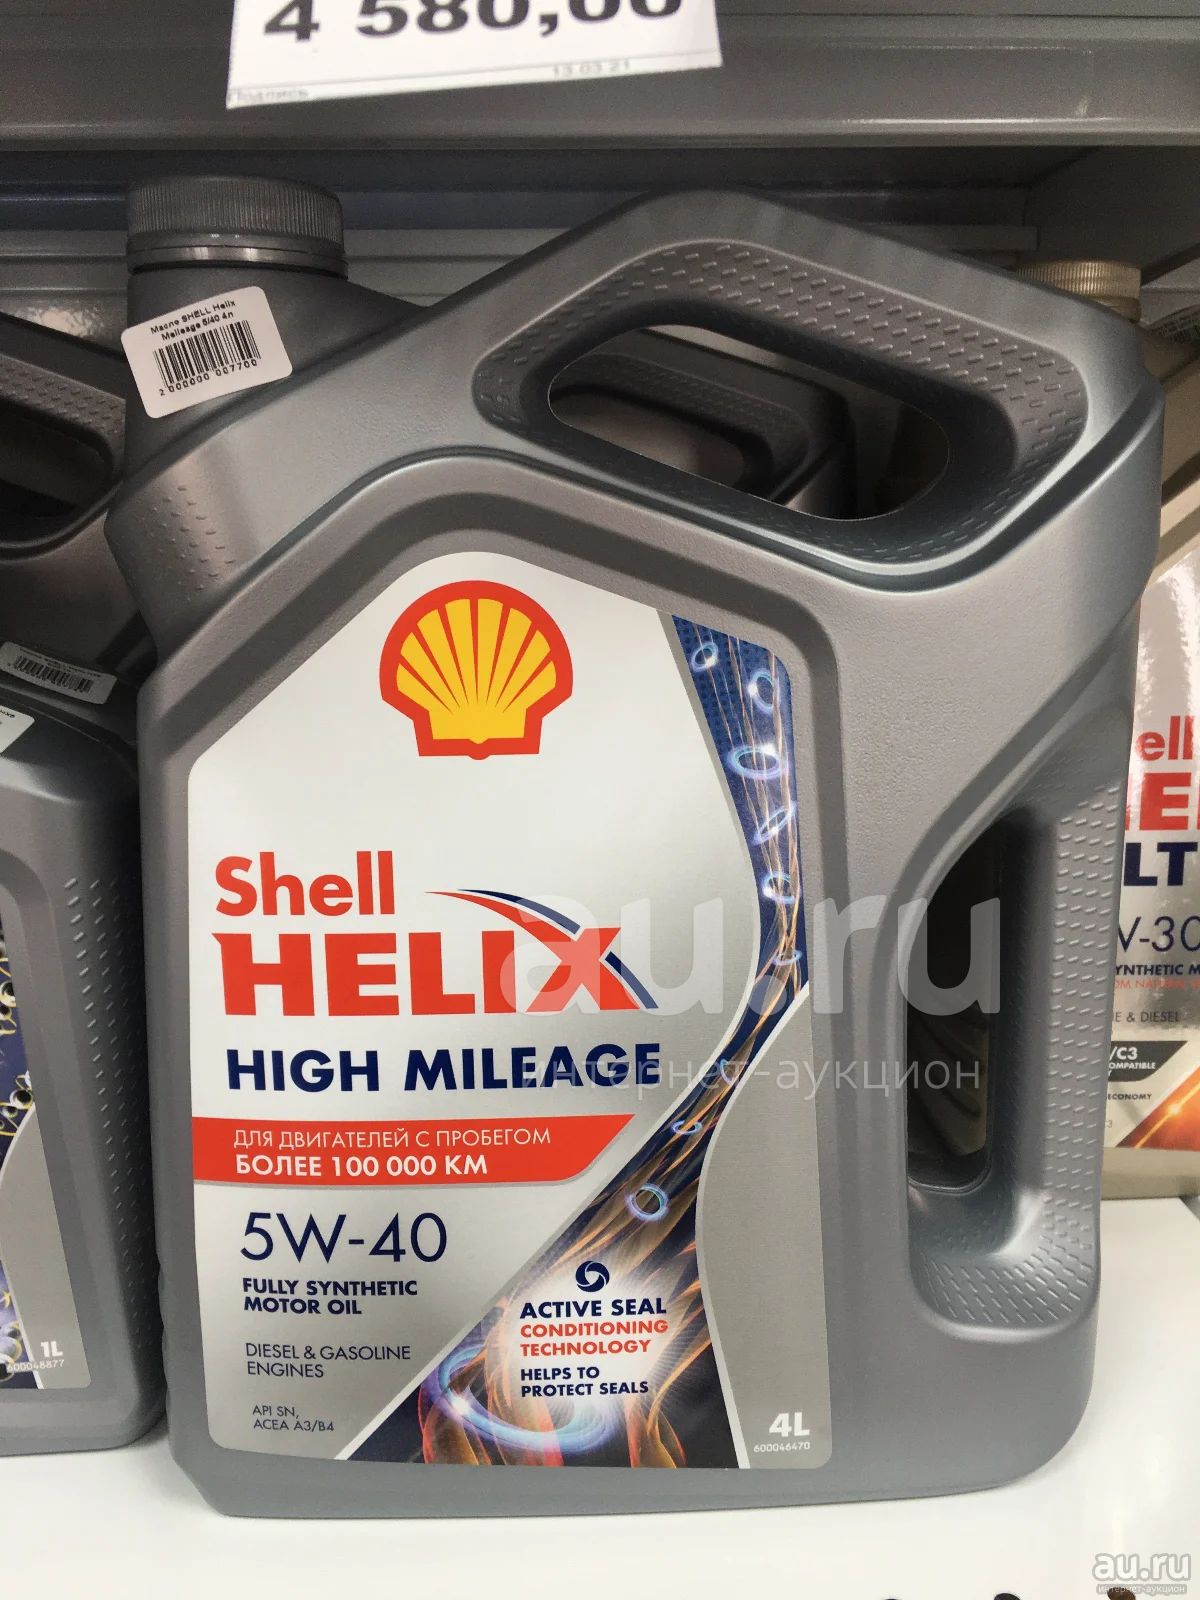 Shell helix high. Shell Helix Mileage.